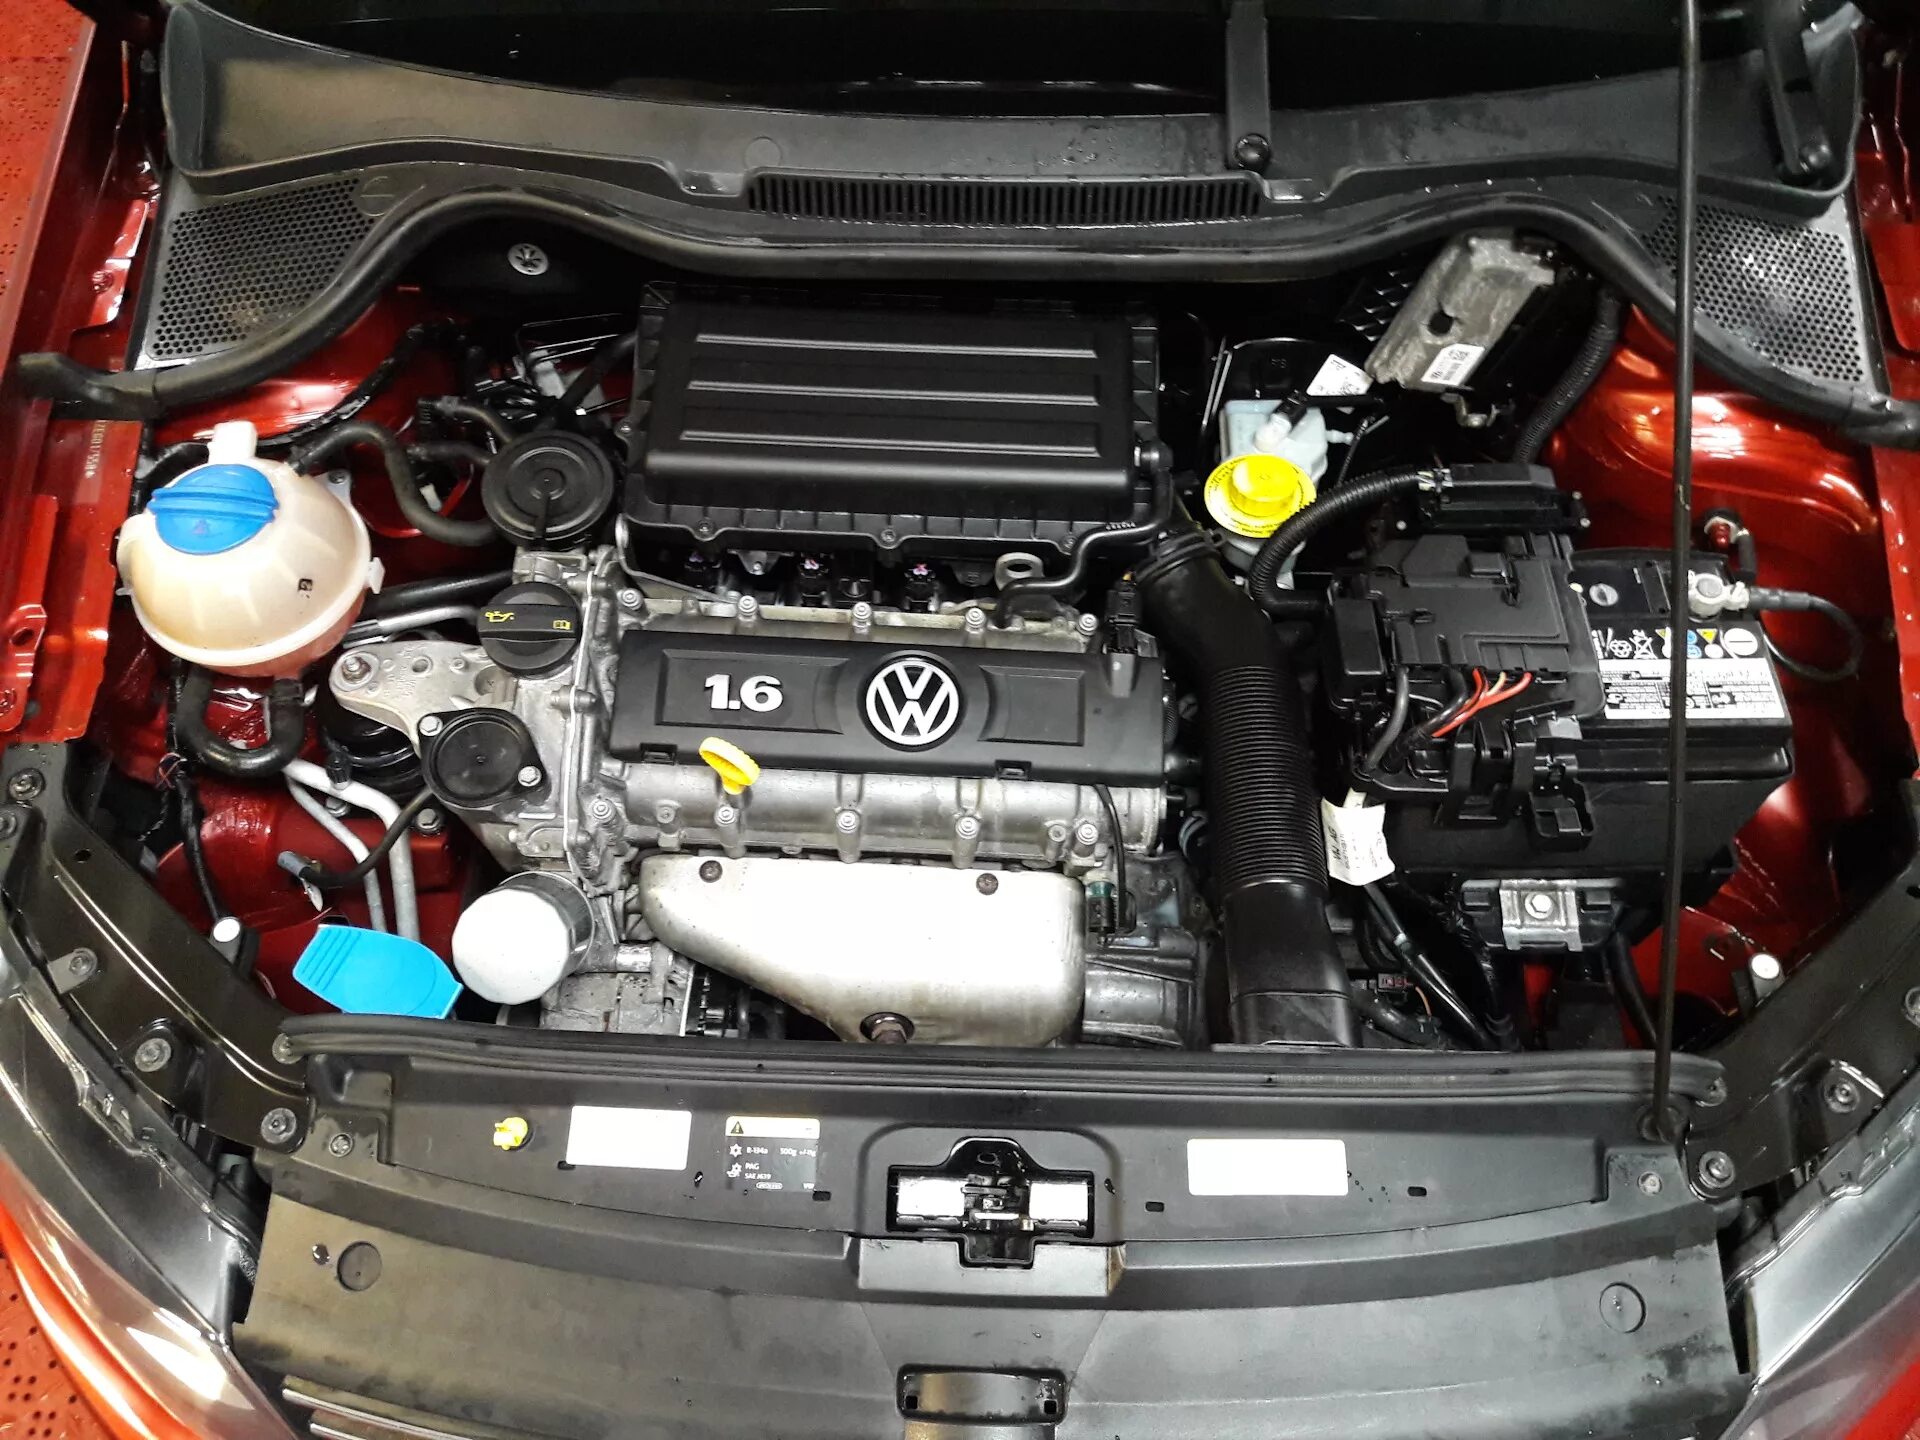 Volkswagen polo 1.6 двигателя. Фольксваген поло 2012 мотор. Двигатель Фольксваген поло седан 1.6. Мотор Фольксваген поло 1,2. Двигатель Фольксваген поло седан 2012.